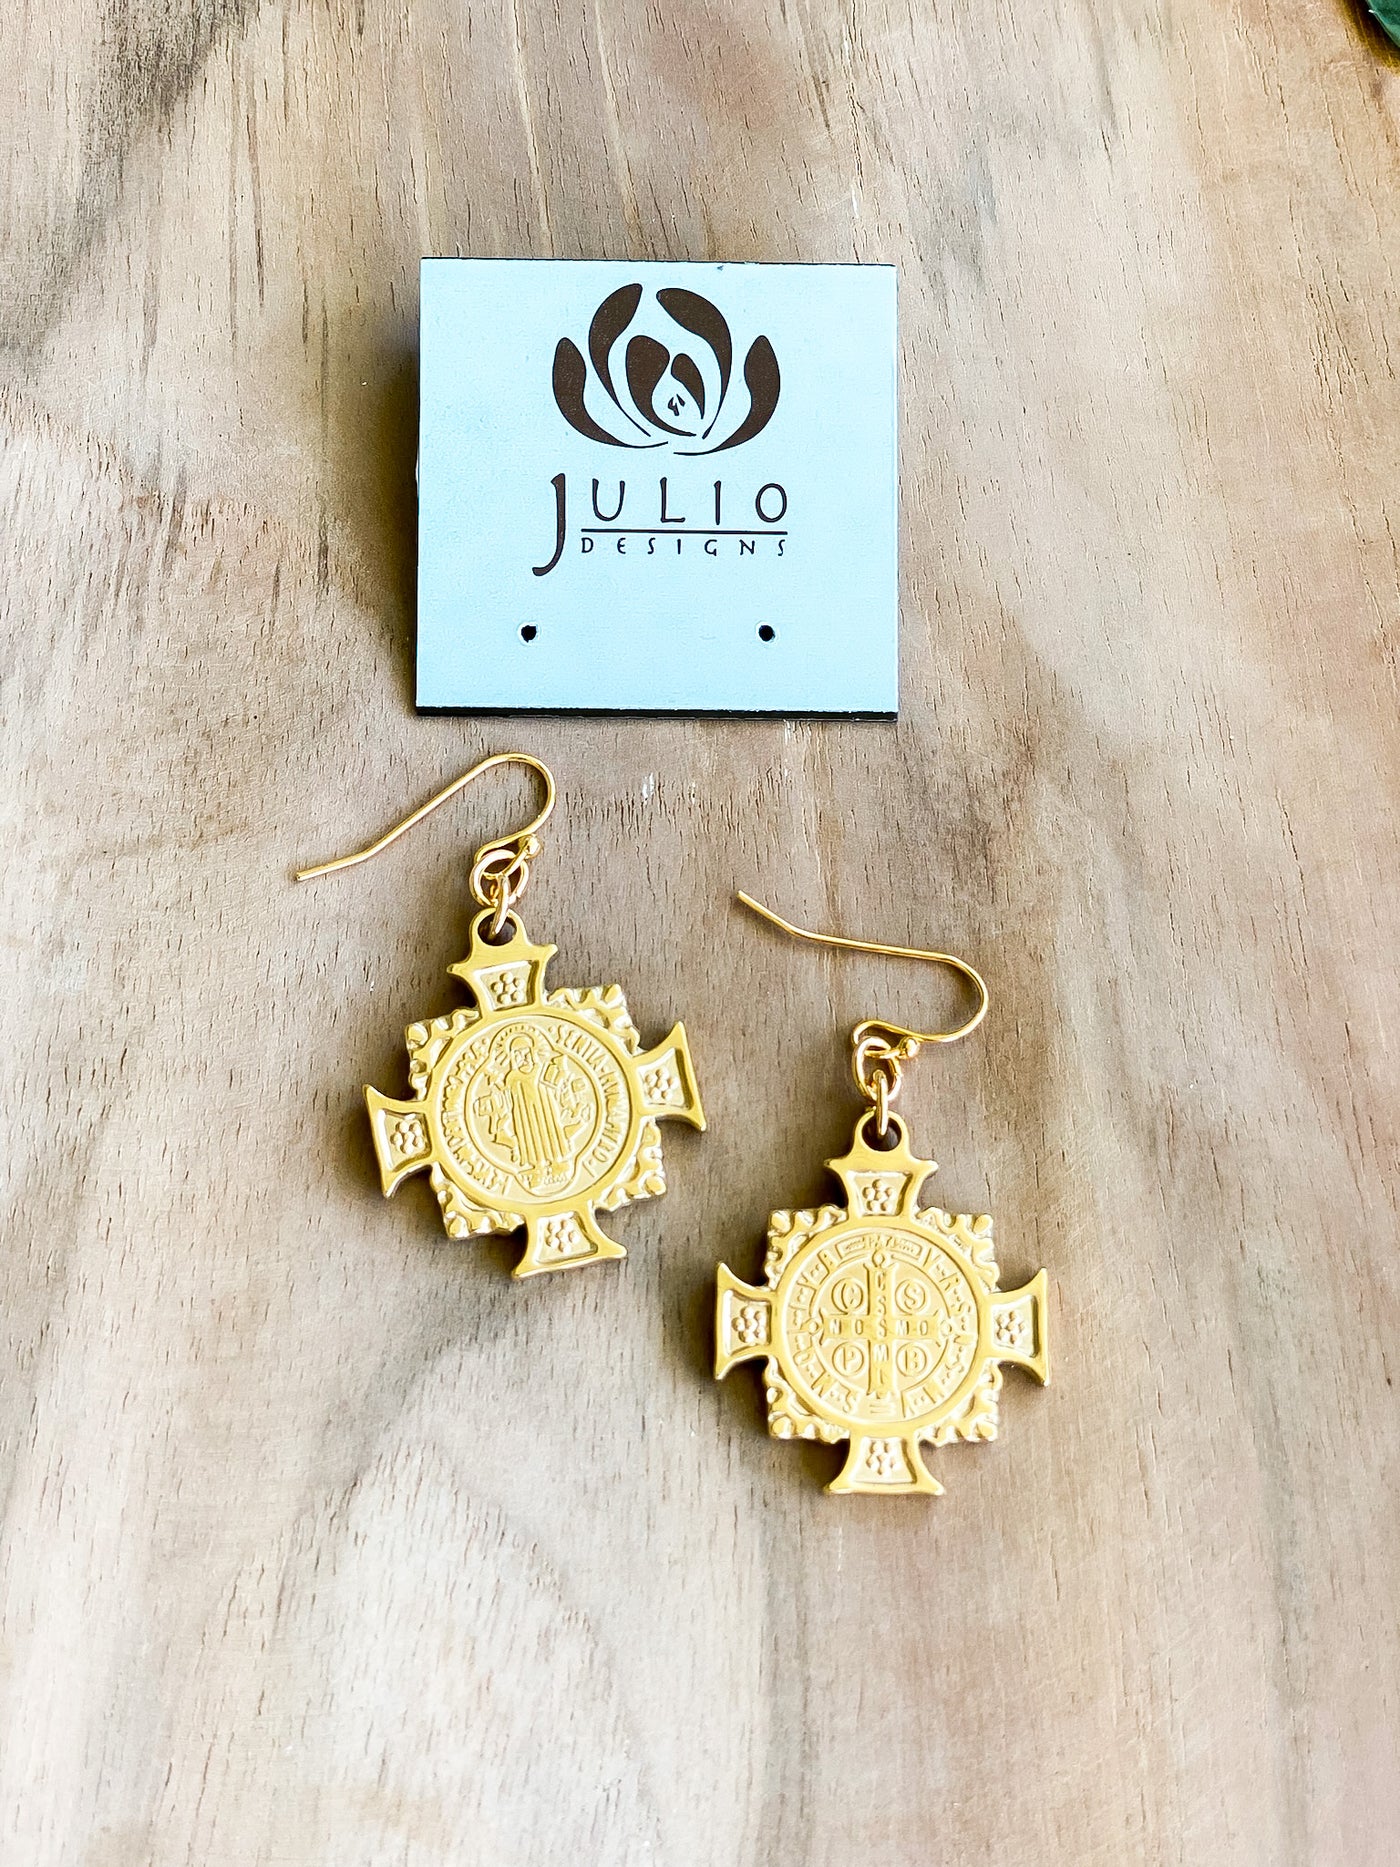 Julio Designs Gold St. Benedictine Cross Earrings